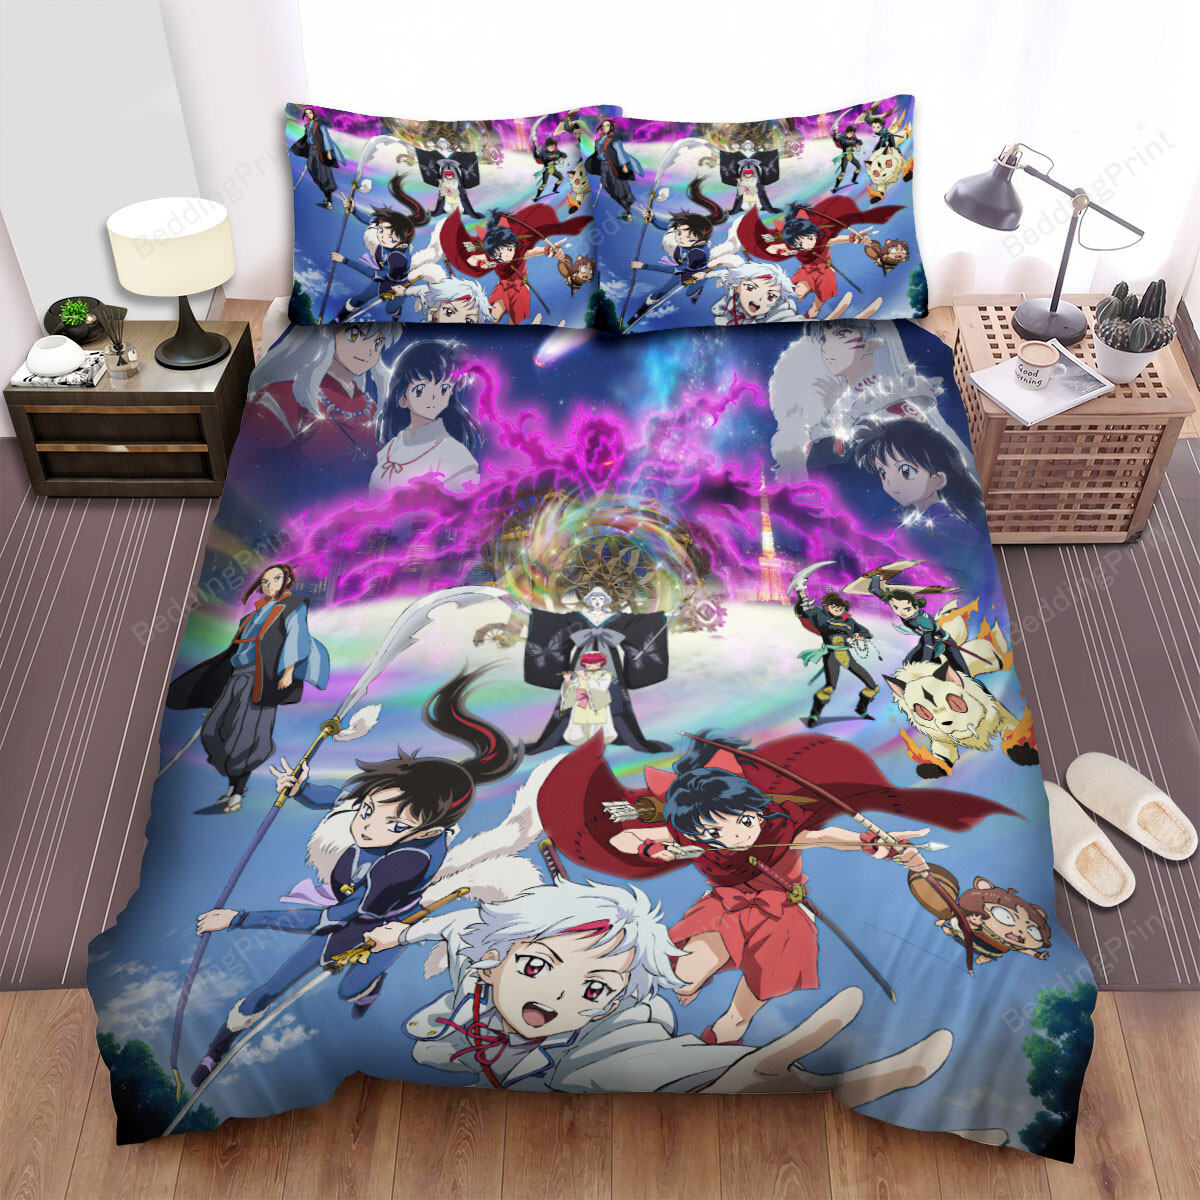 Yashahime Princess Half-Demon Main Characters Poster Bed Sheets Spread Duvet Cover Bedding Sets